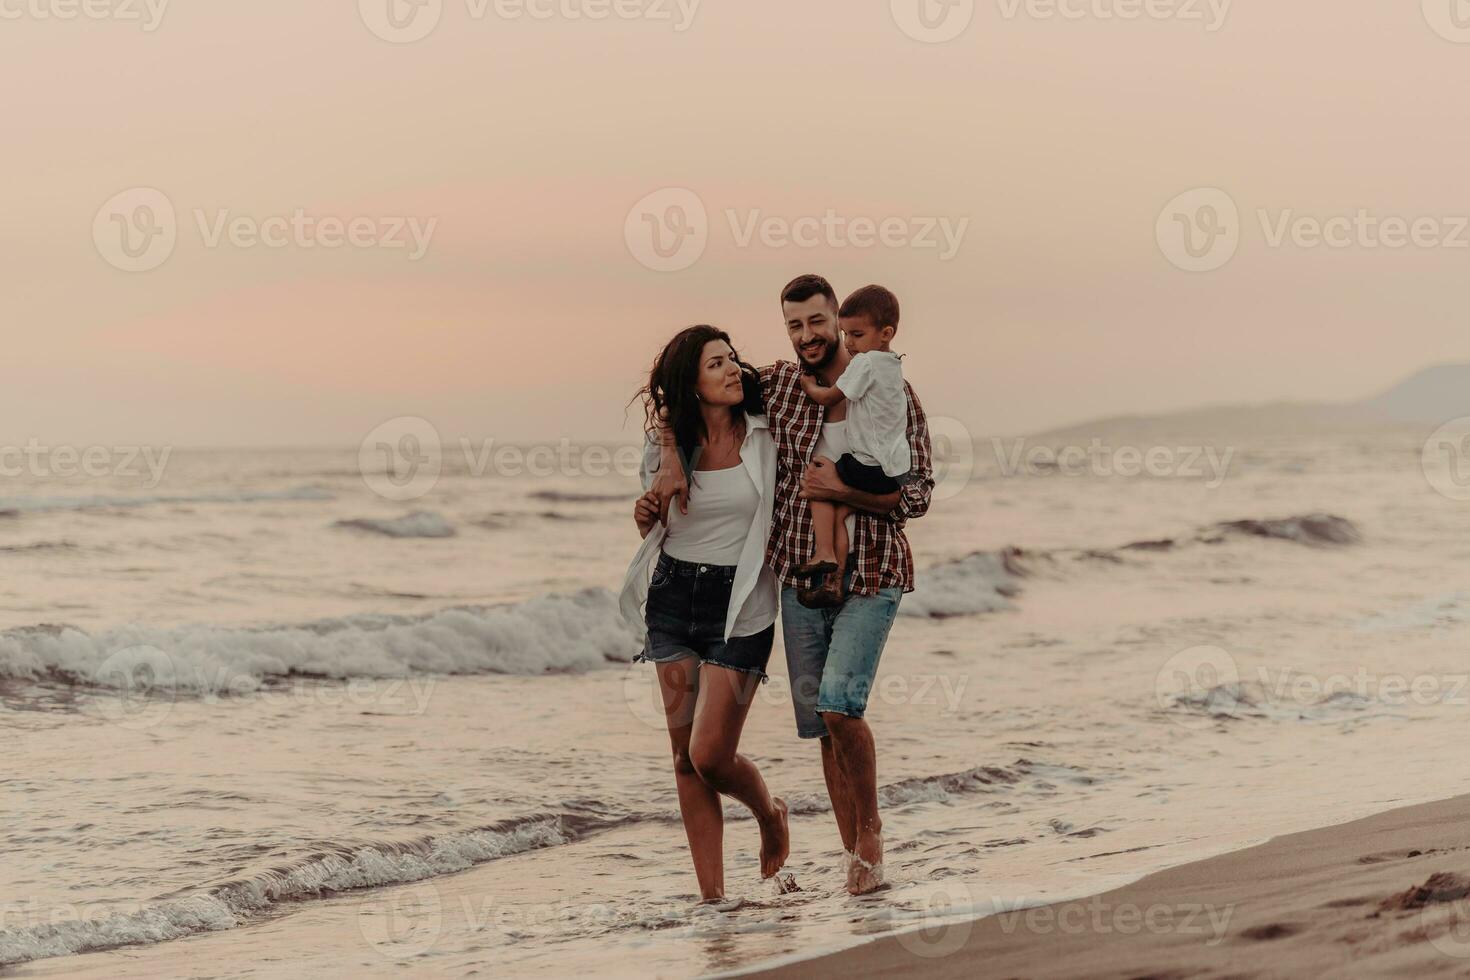 The family enjoys their vacation as they walk the sandy beach with their son. Selective focus photo